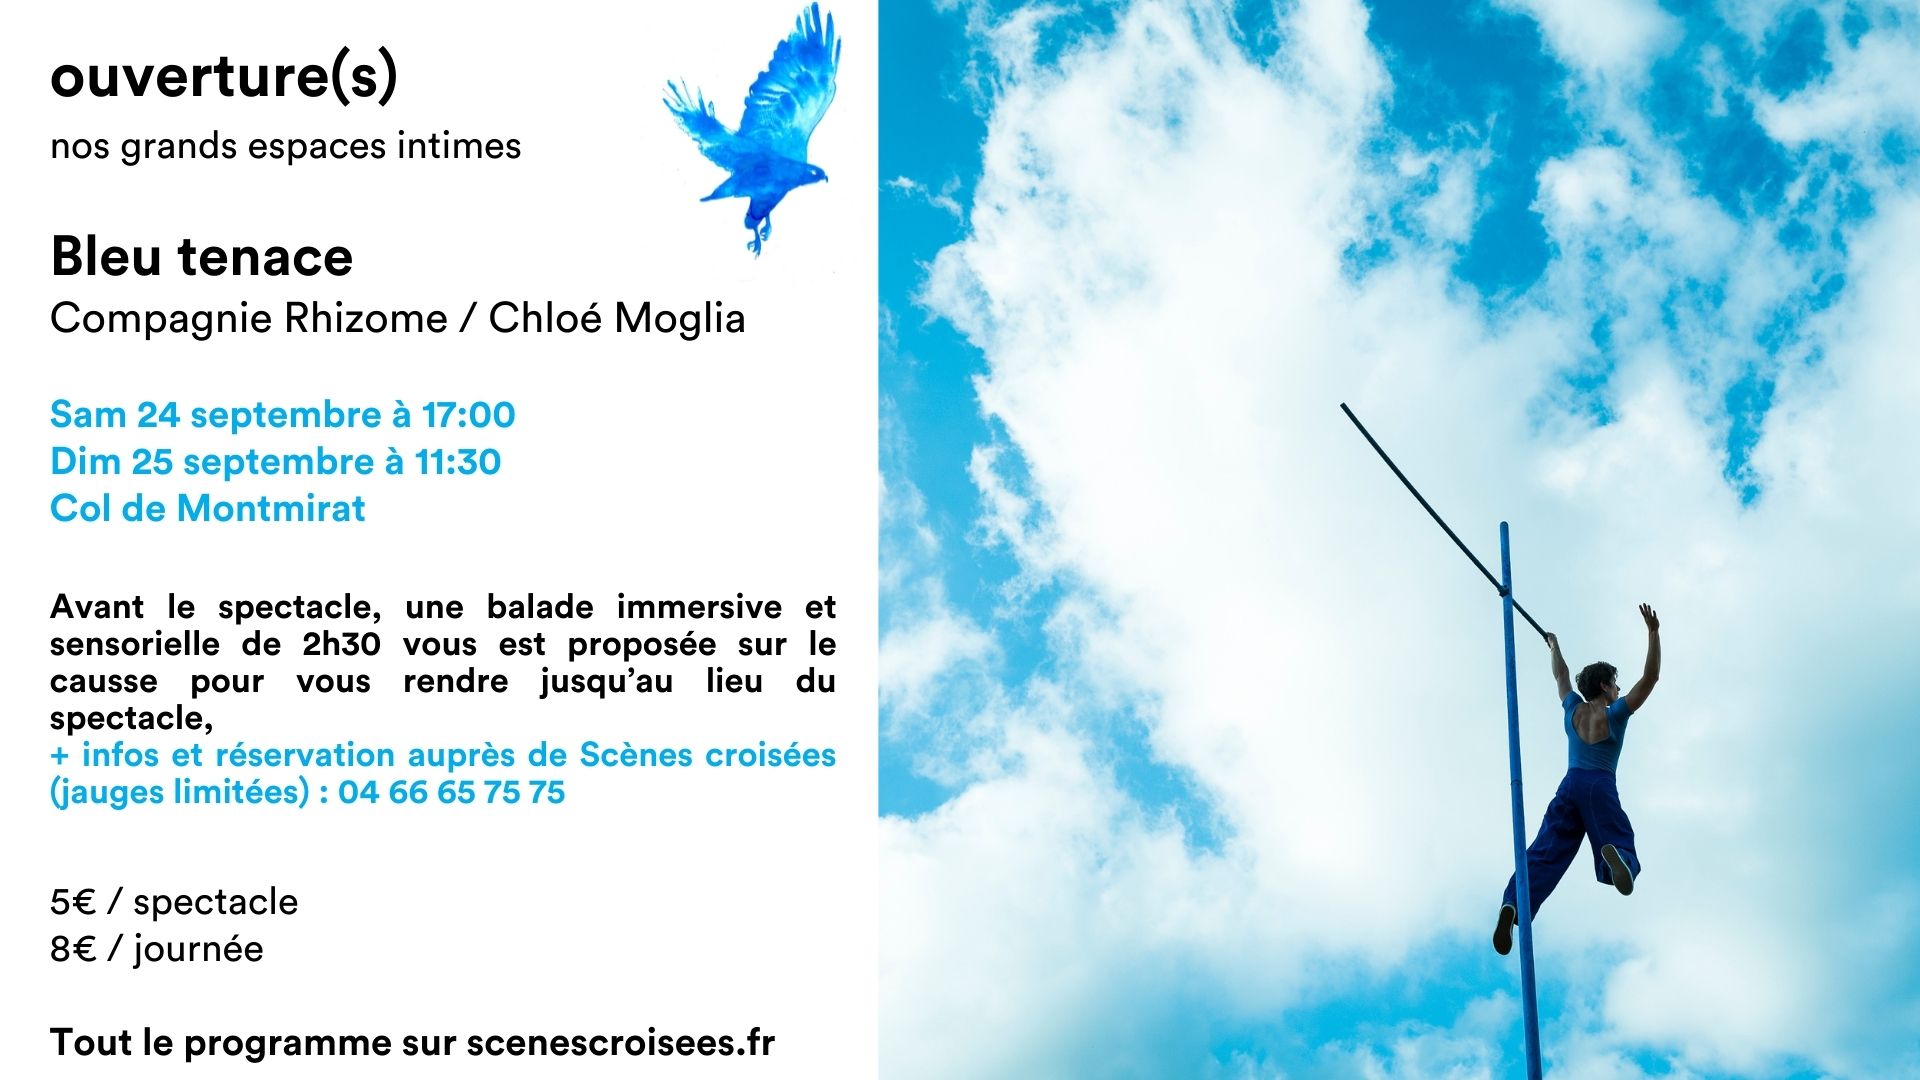 Lozère - Spectacle  Bleu tenace  - Rhizome - Chloé Moglia